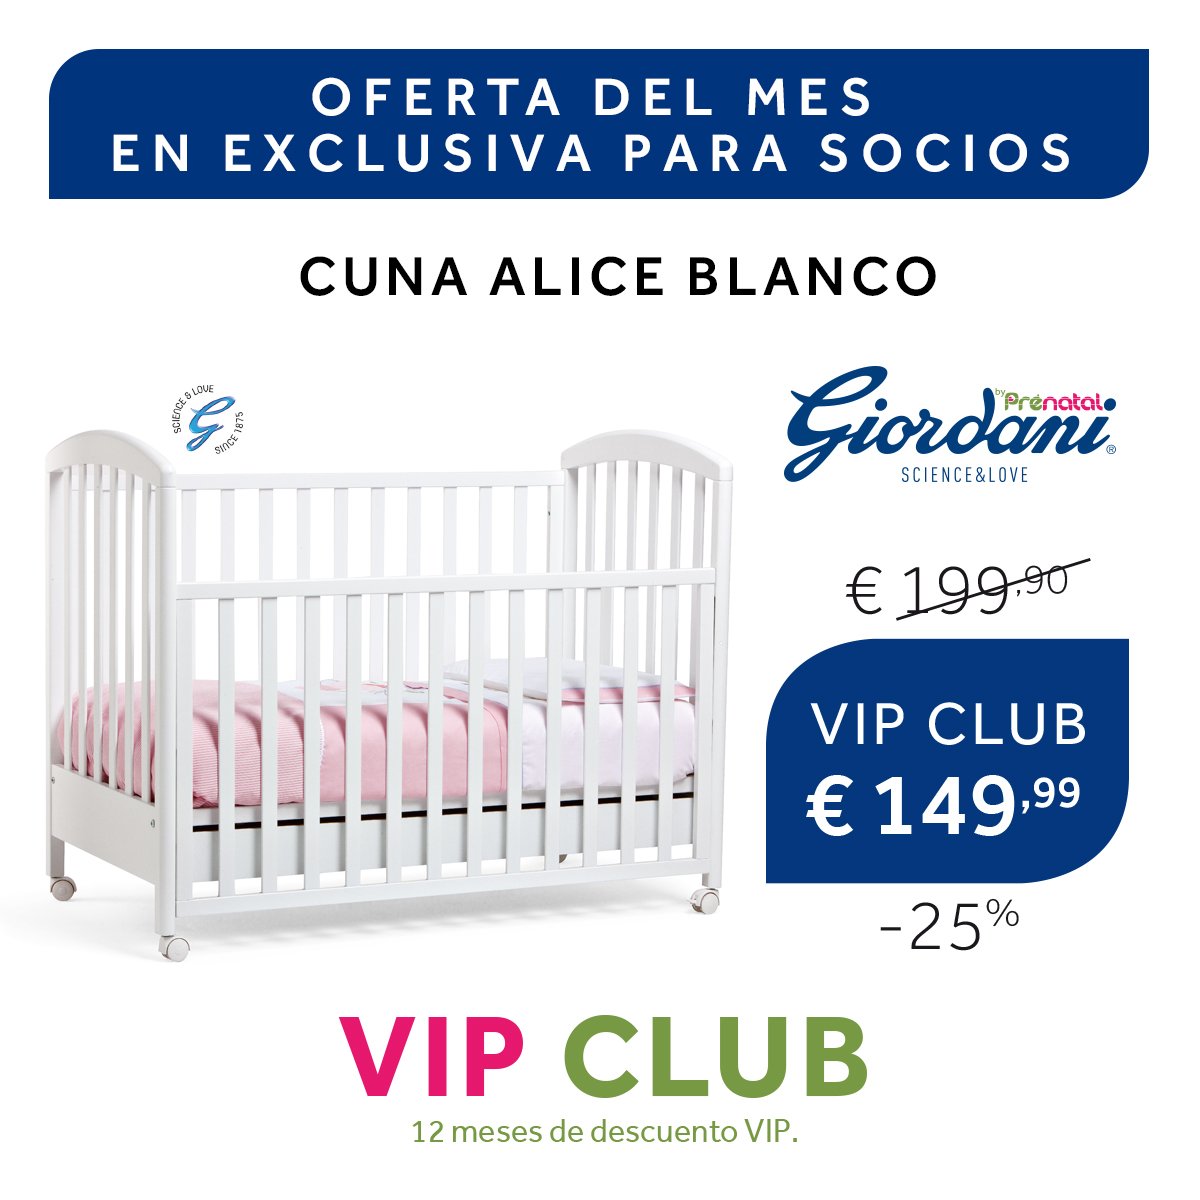 Prénatal España on Twitter: eres cliente VIP, este mes la cuna Alice Giordani by Prénatal tiene un precio especial: solo 149.99€! ¡Aprovéchalo! https://t.co/yRcbOI9llE" / Twitter